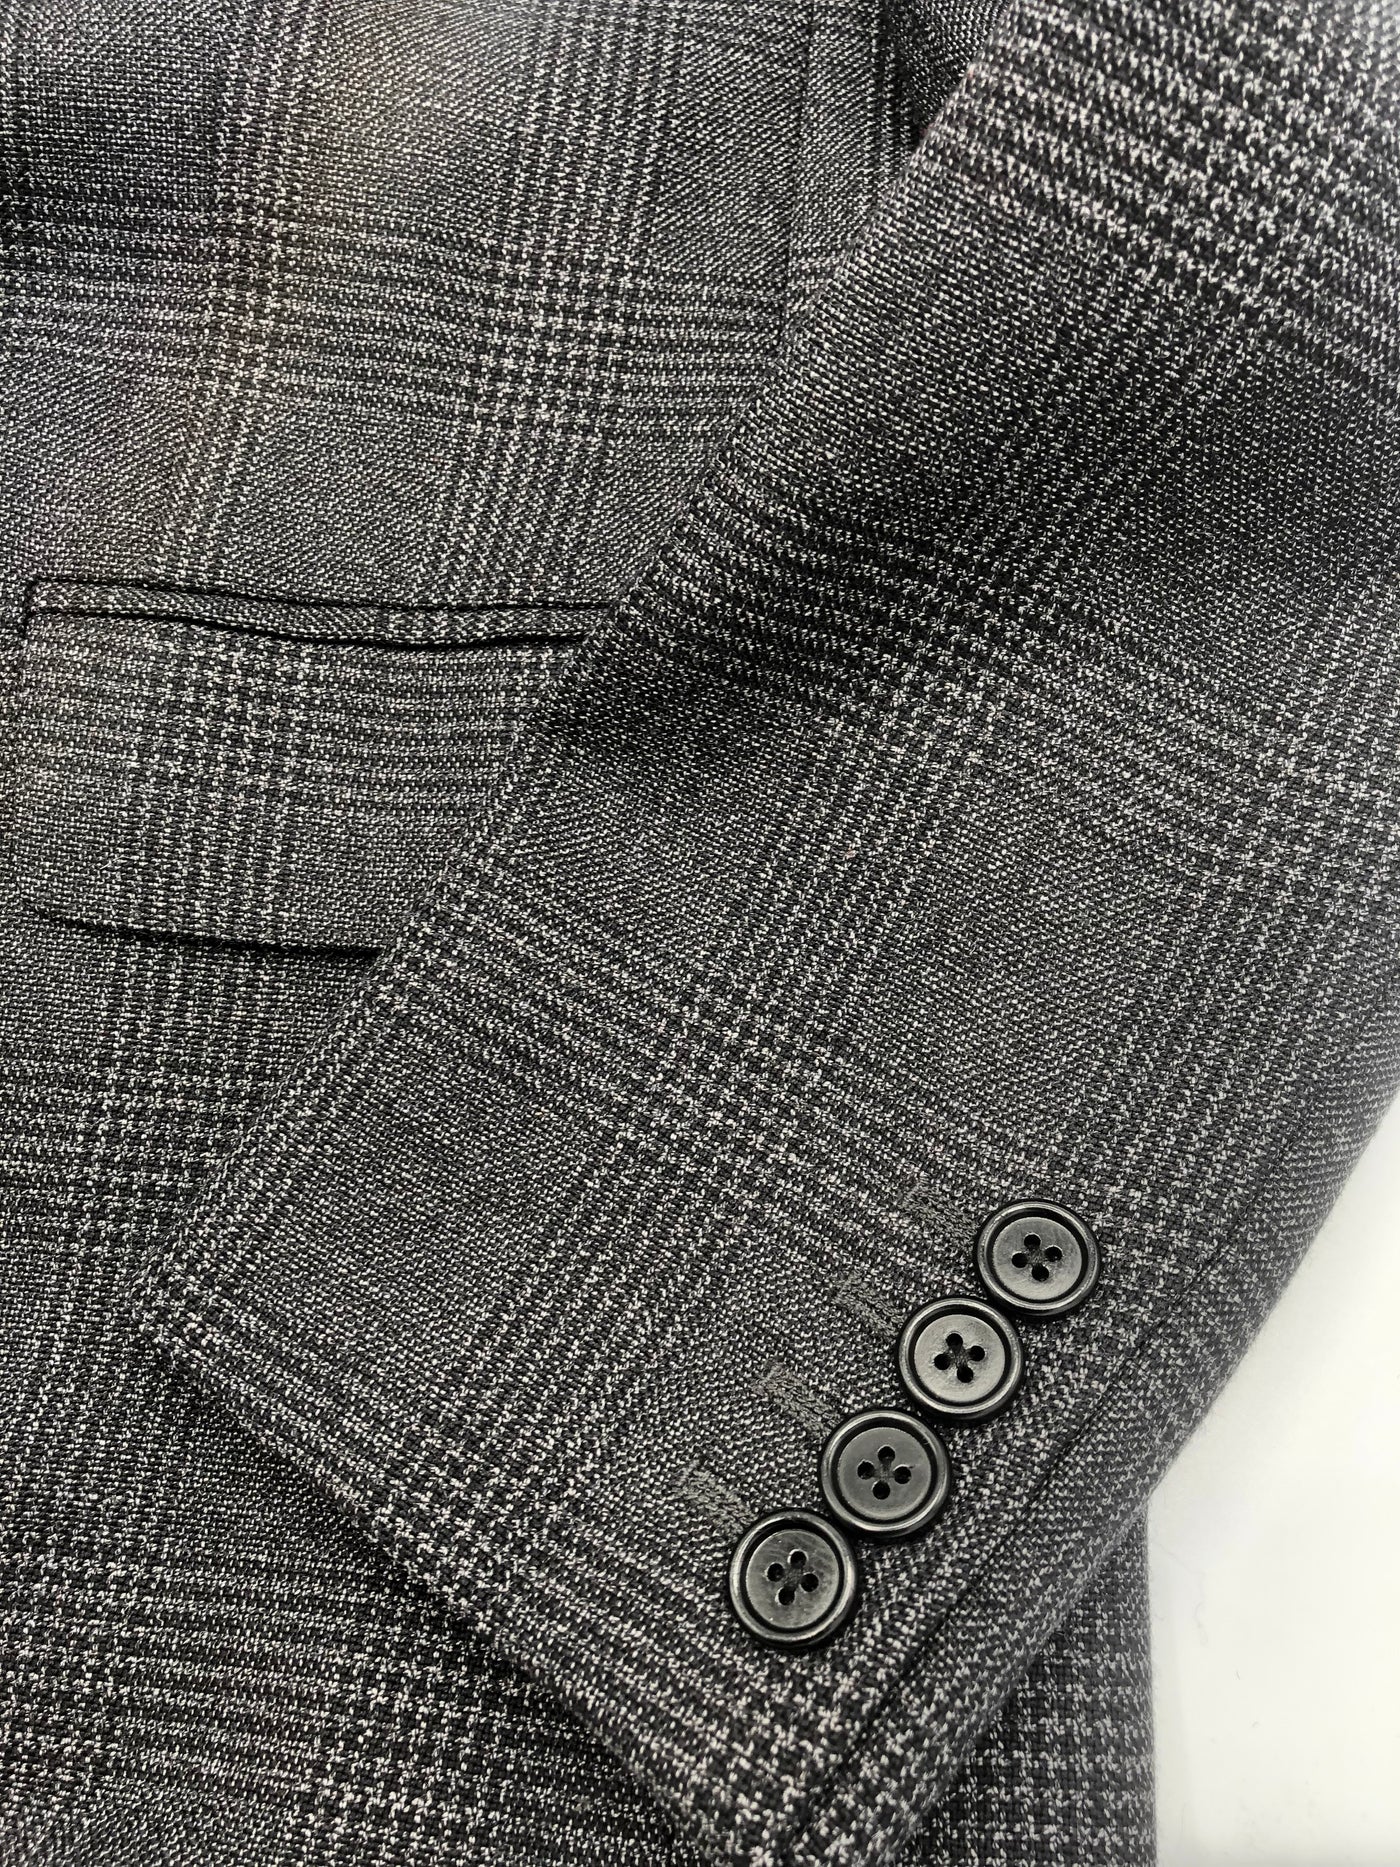 CELINE short grey blazer jacket size 38 RRP: Approx. £2250